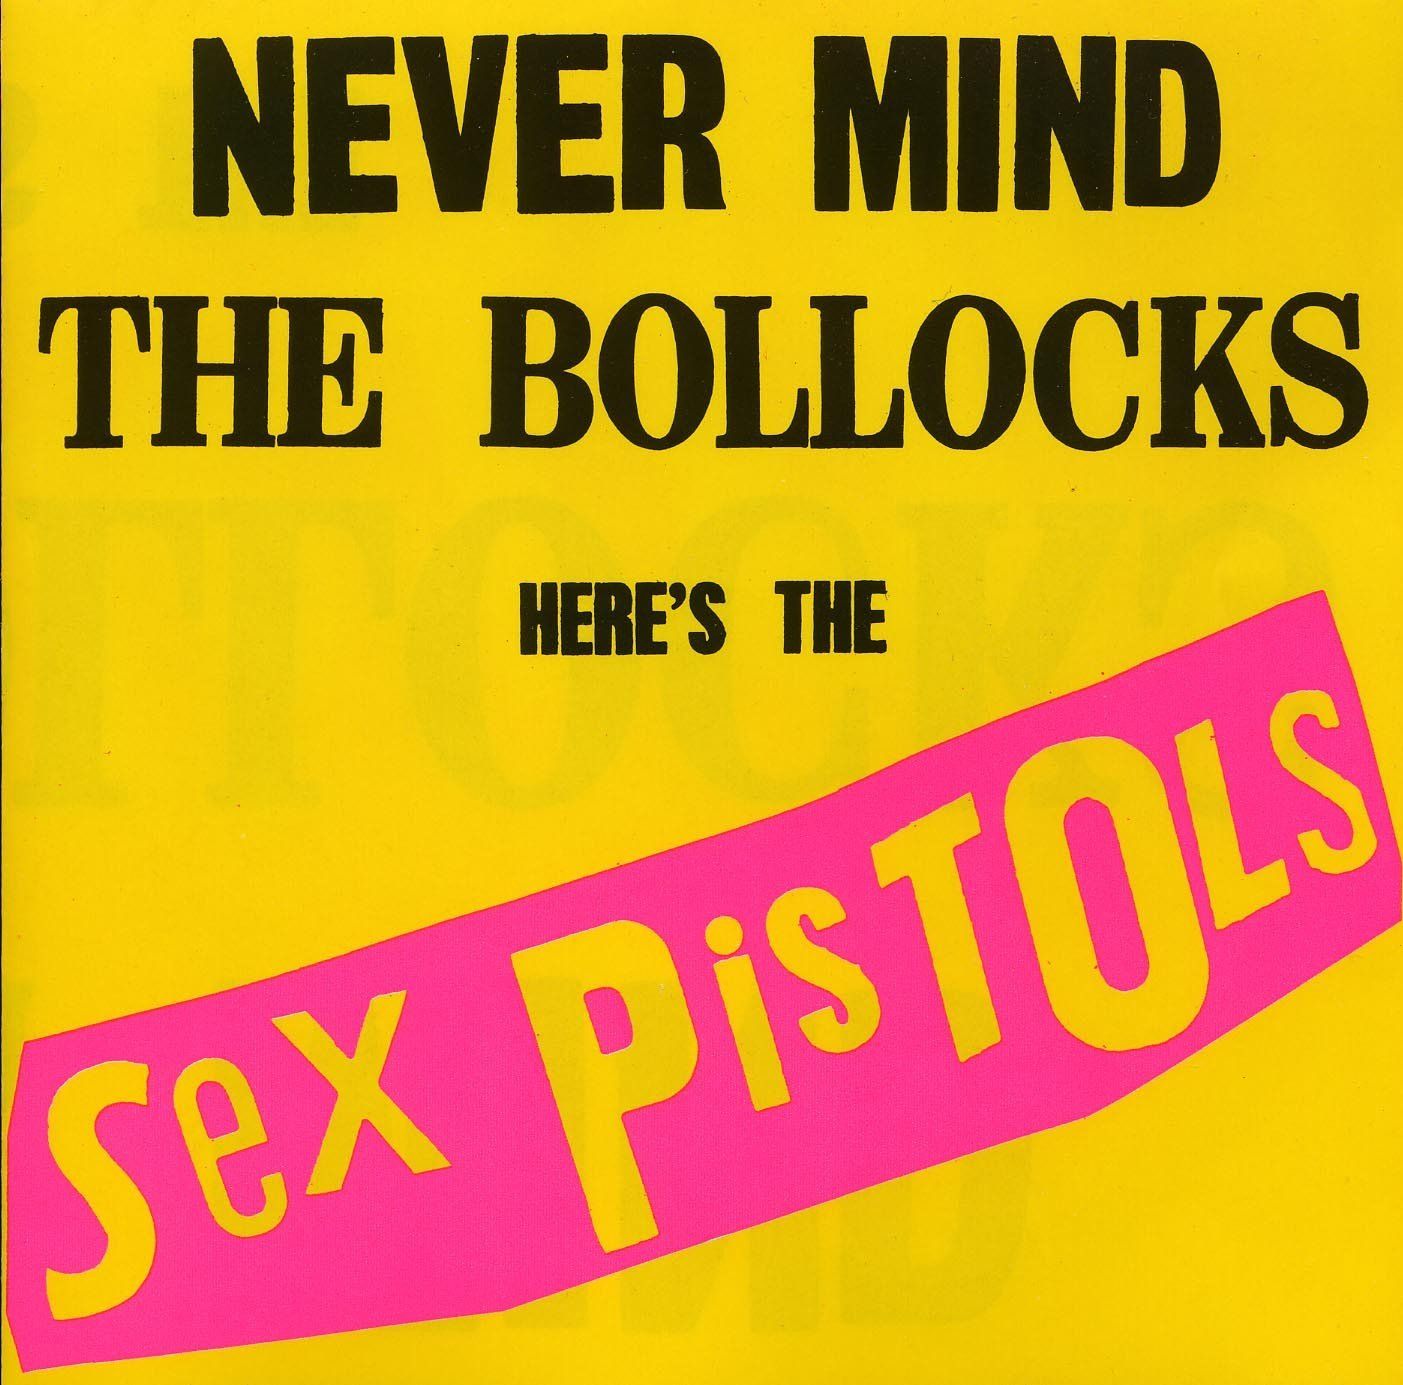 best of The bollocks Sex pistols mind never